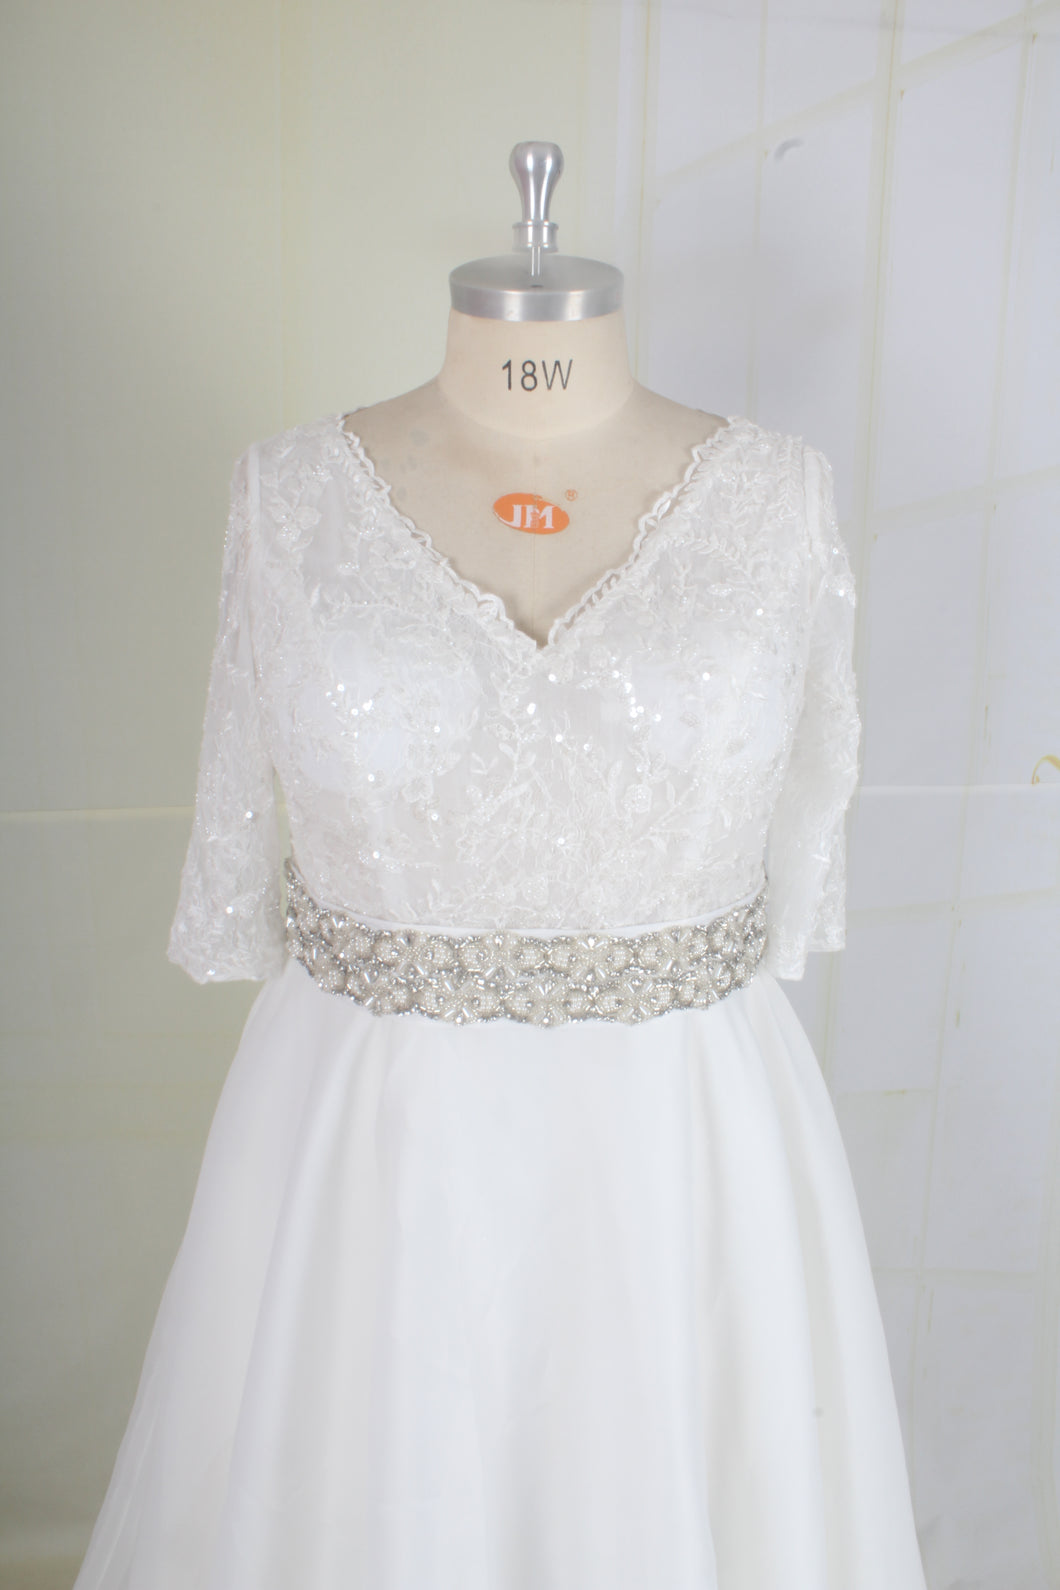 C2022-Munro - short sleeve plus size v-neck wedding ball gown